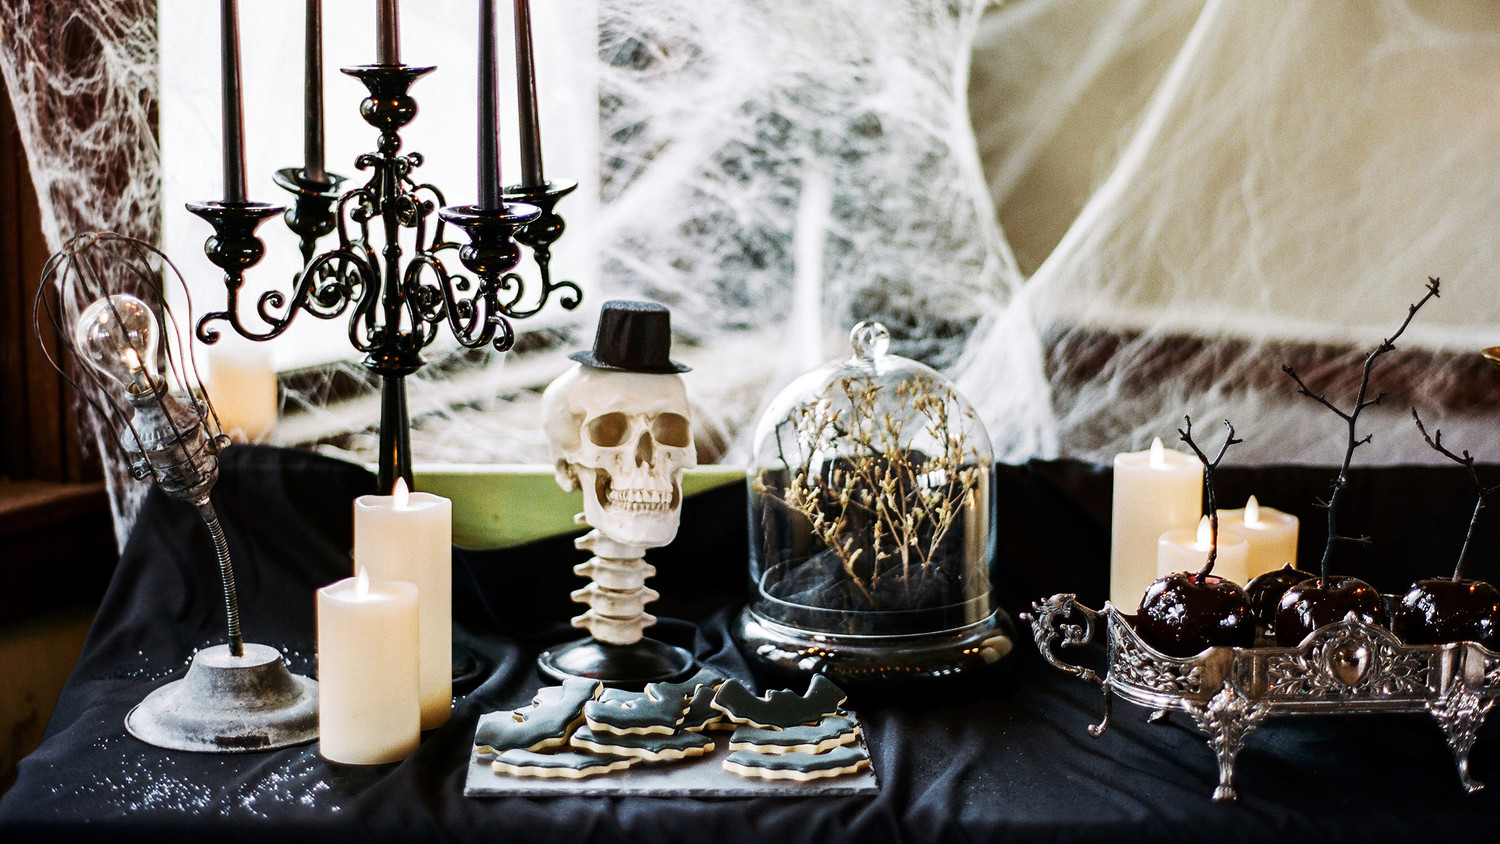 eli skeleton masquerade birthday party table decor cookies candles skulls